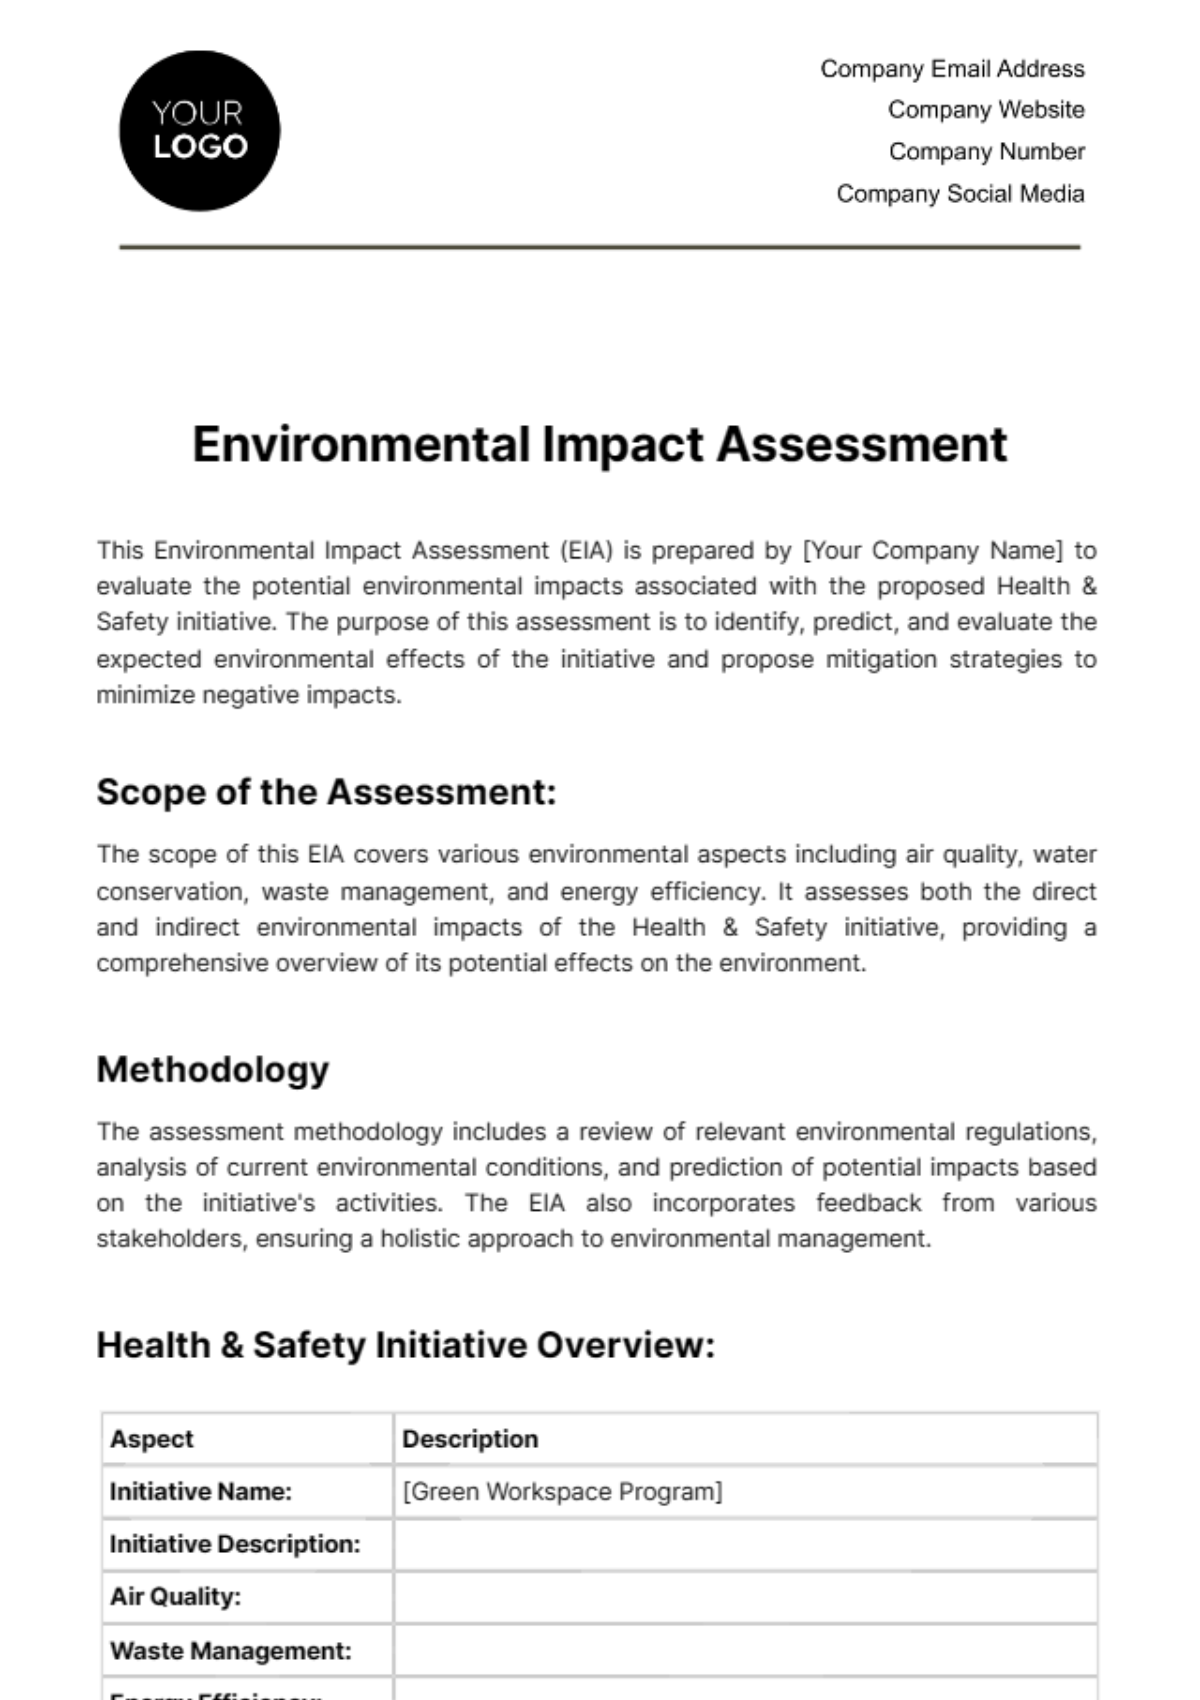 Environmental Impact Assessment Template